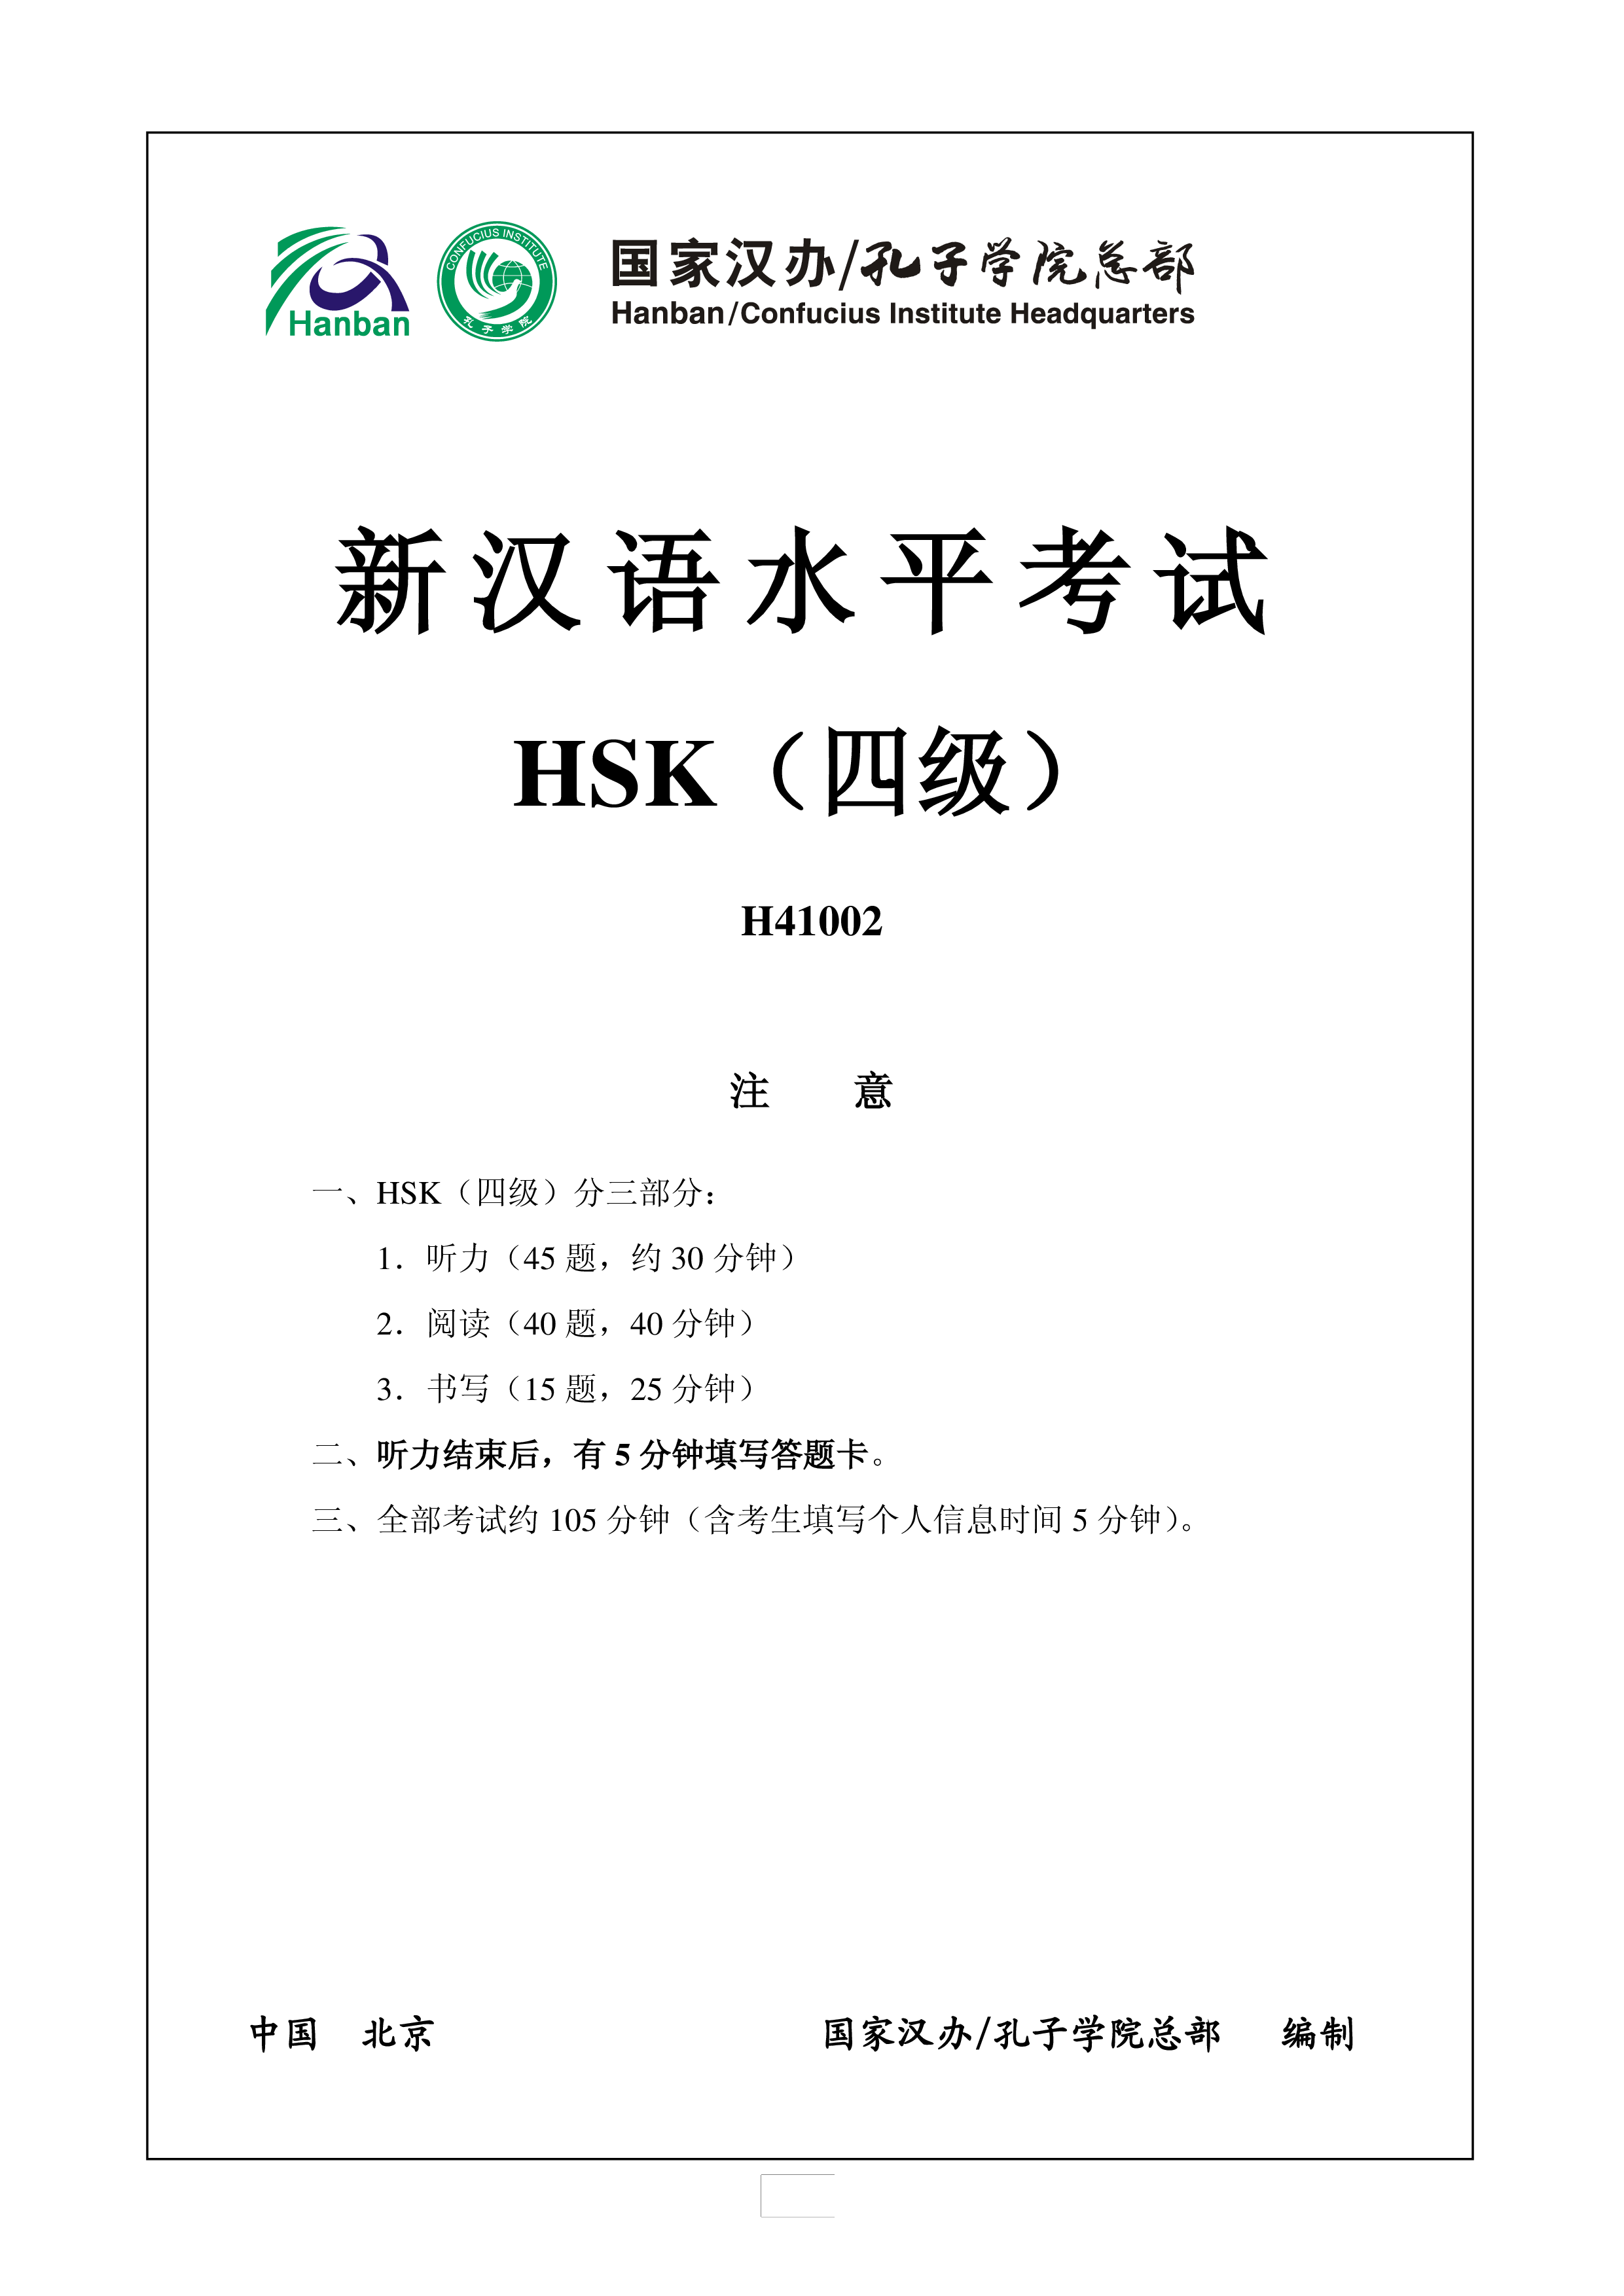 hsk4 chinese exam including answers # hsk h41002 Hauptschablonenbild